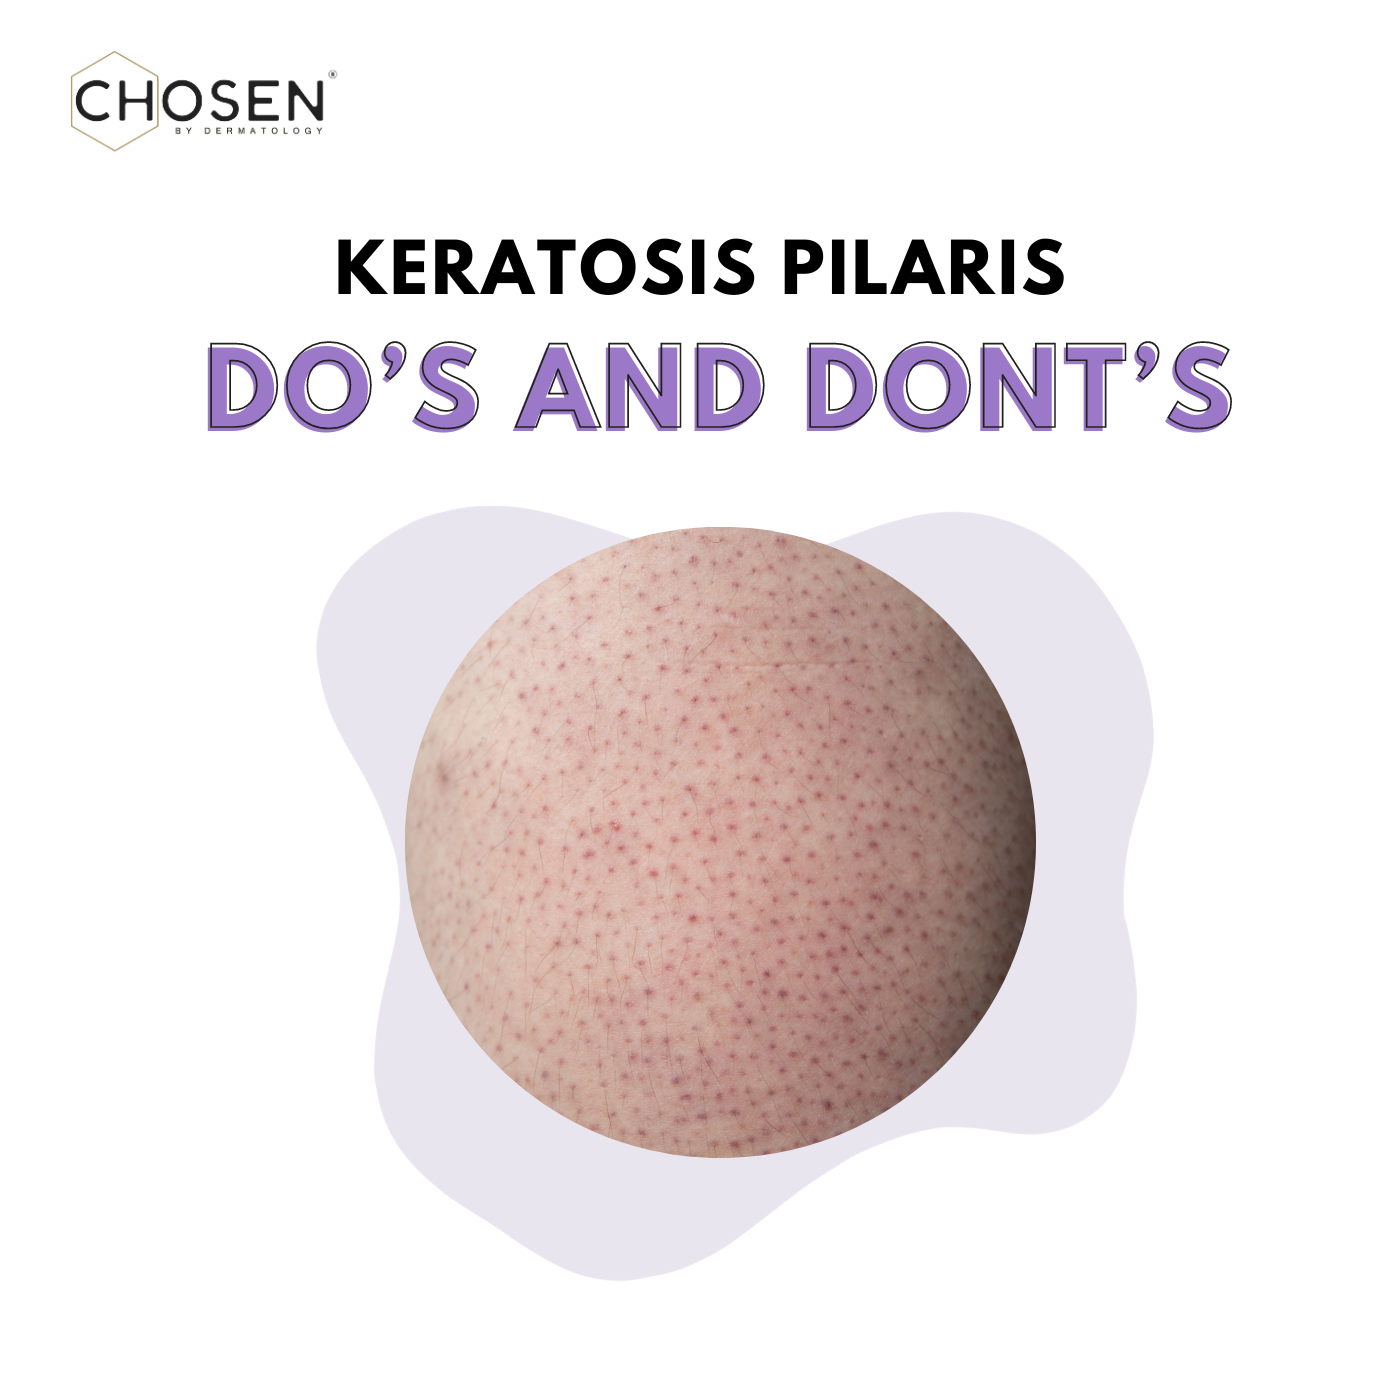 TRUE STORY: Your girl has keratosis pilaris, ingrown hair and strawberry  legs! — SunKissOrganics